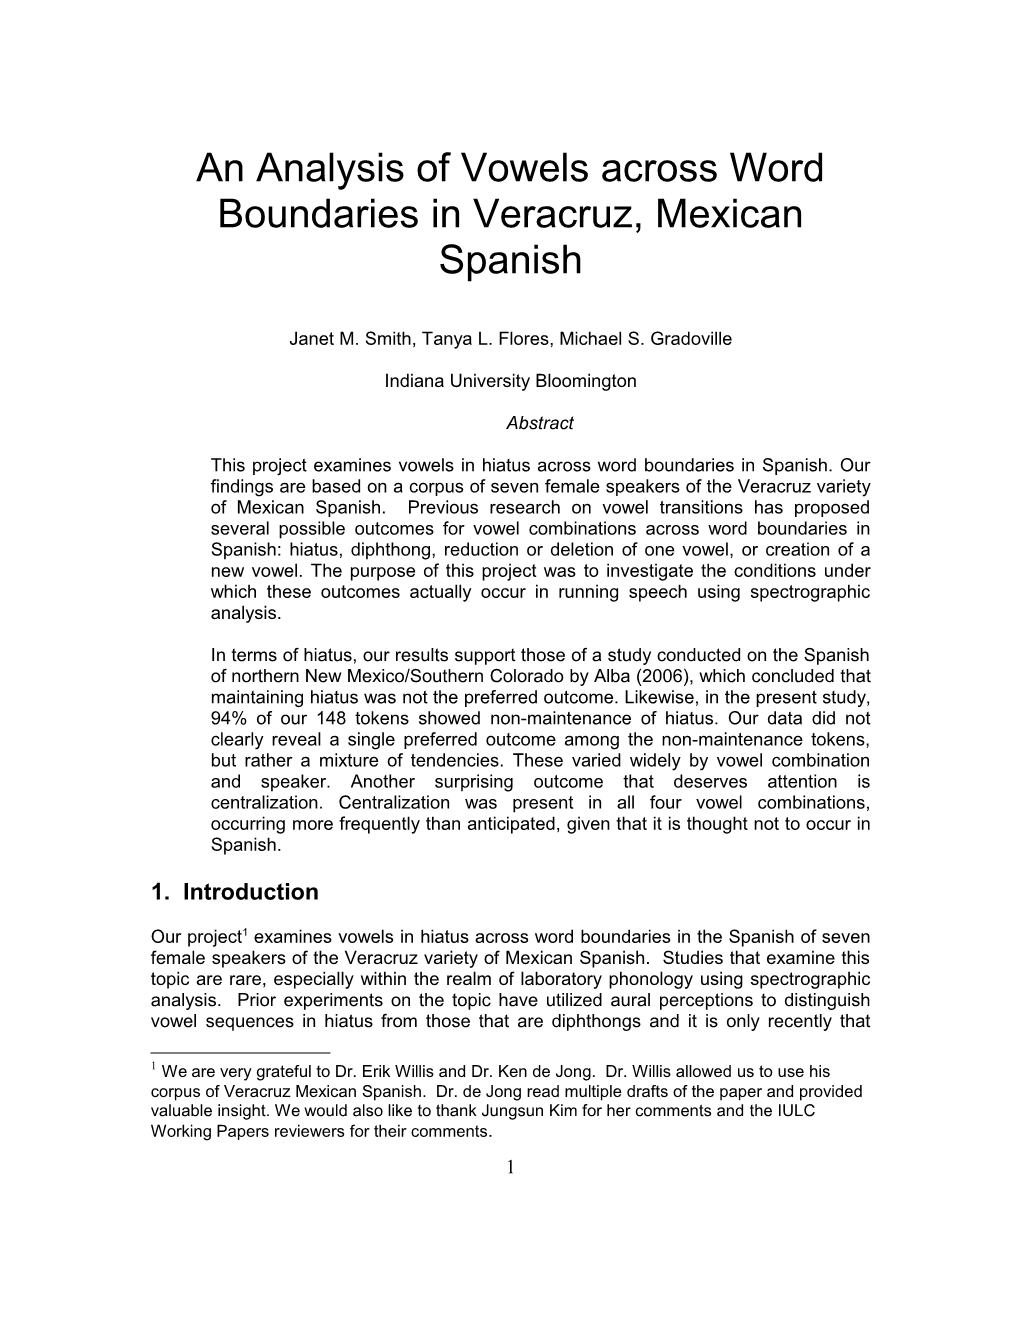 An Analysis of Vowels Across Word Boundaries in Veracruz, Mexican Spanish